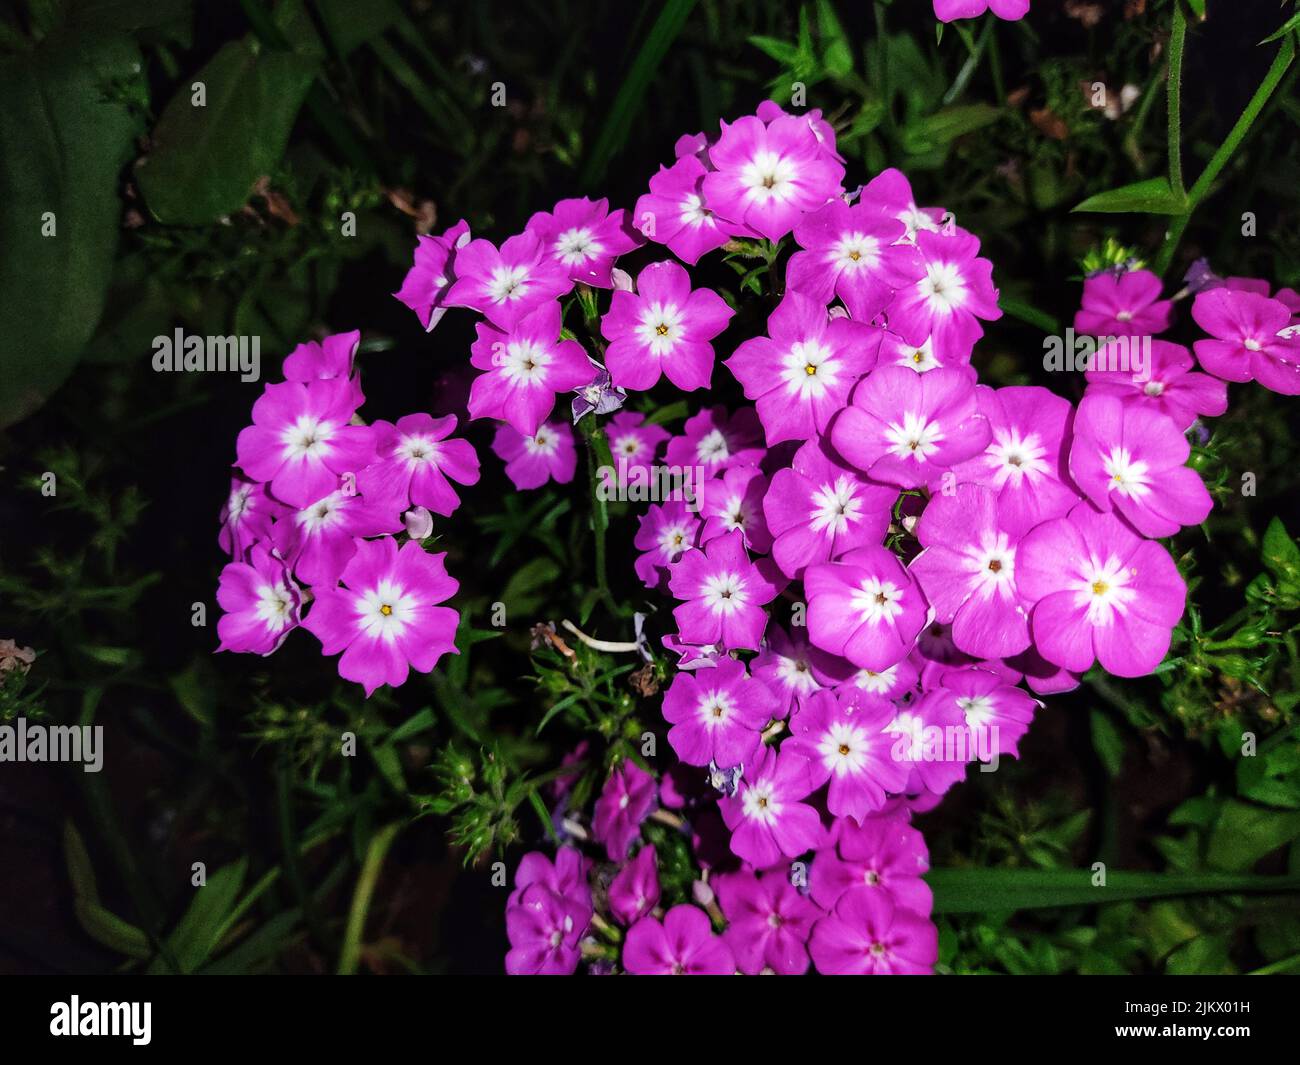 A closeup shot of purple Phlox flowers blooming in a garden Stock Photo